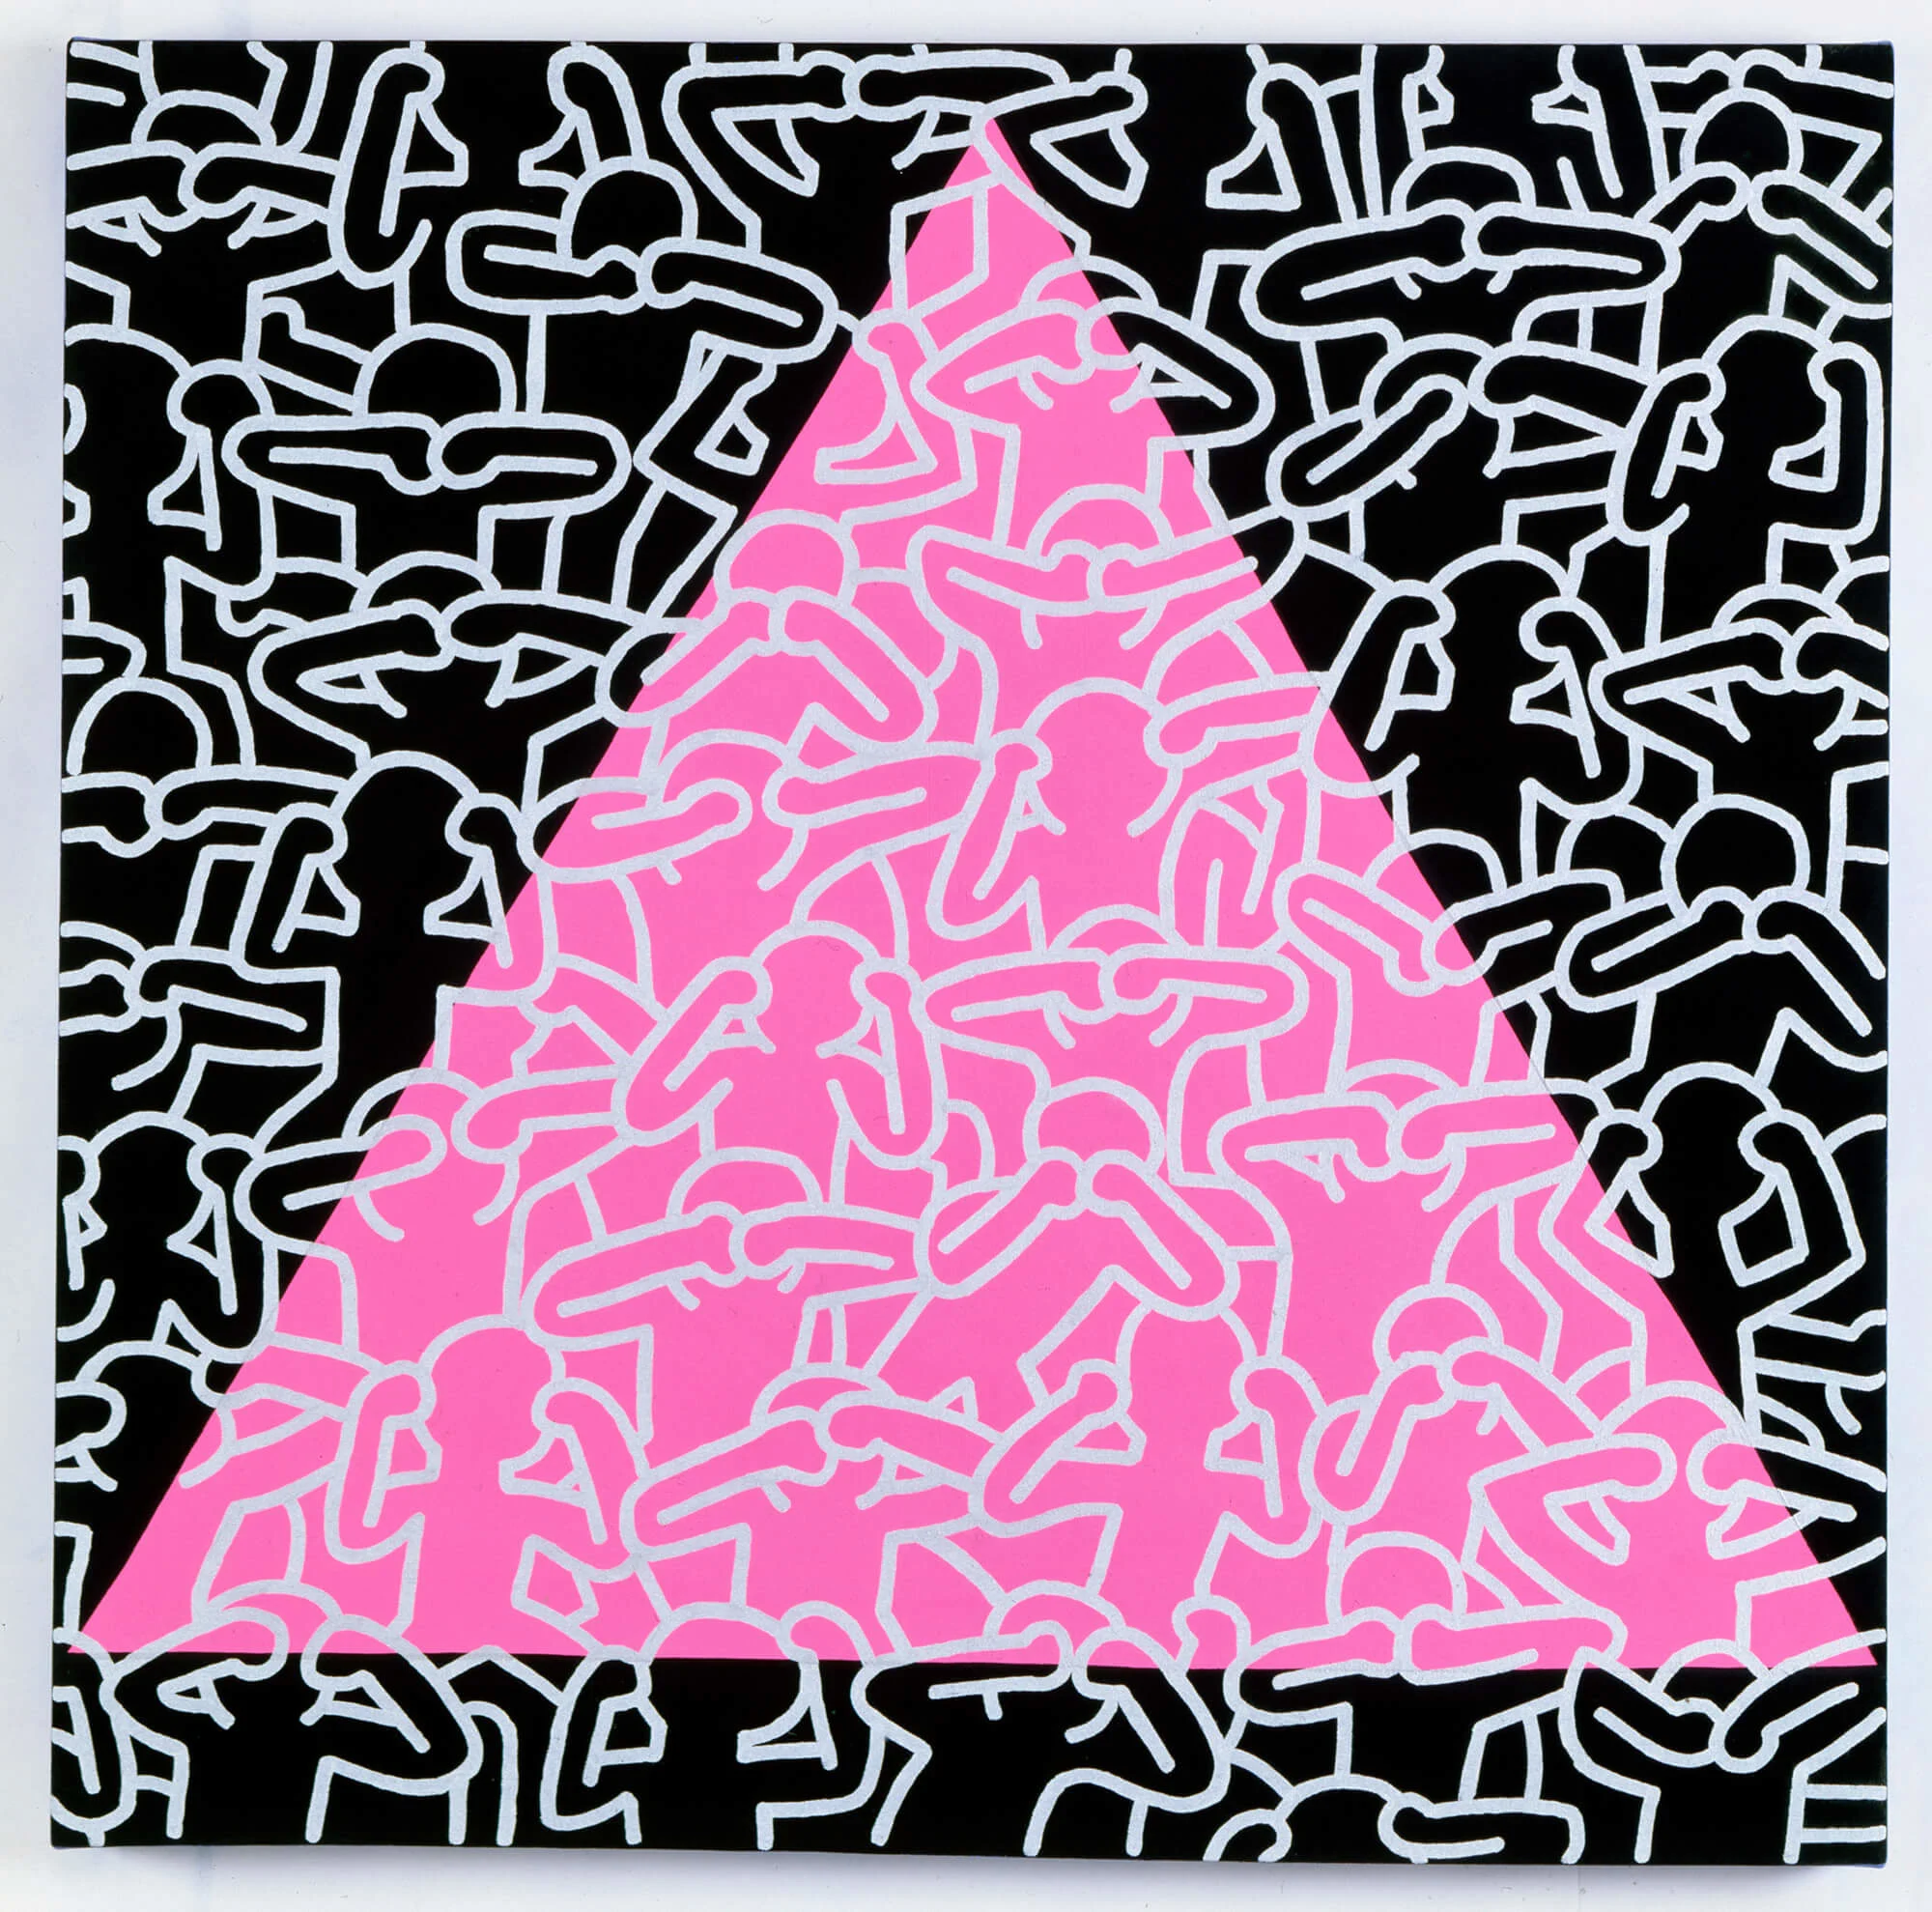 Silence = Death 1989 © Keith Haring Foundation